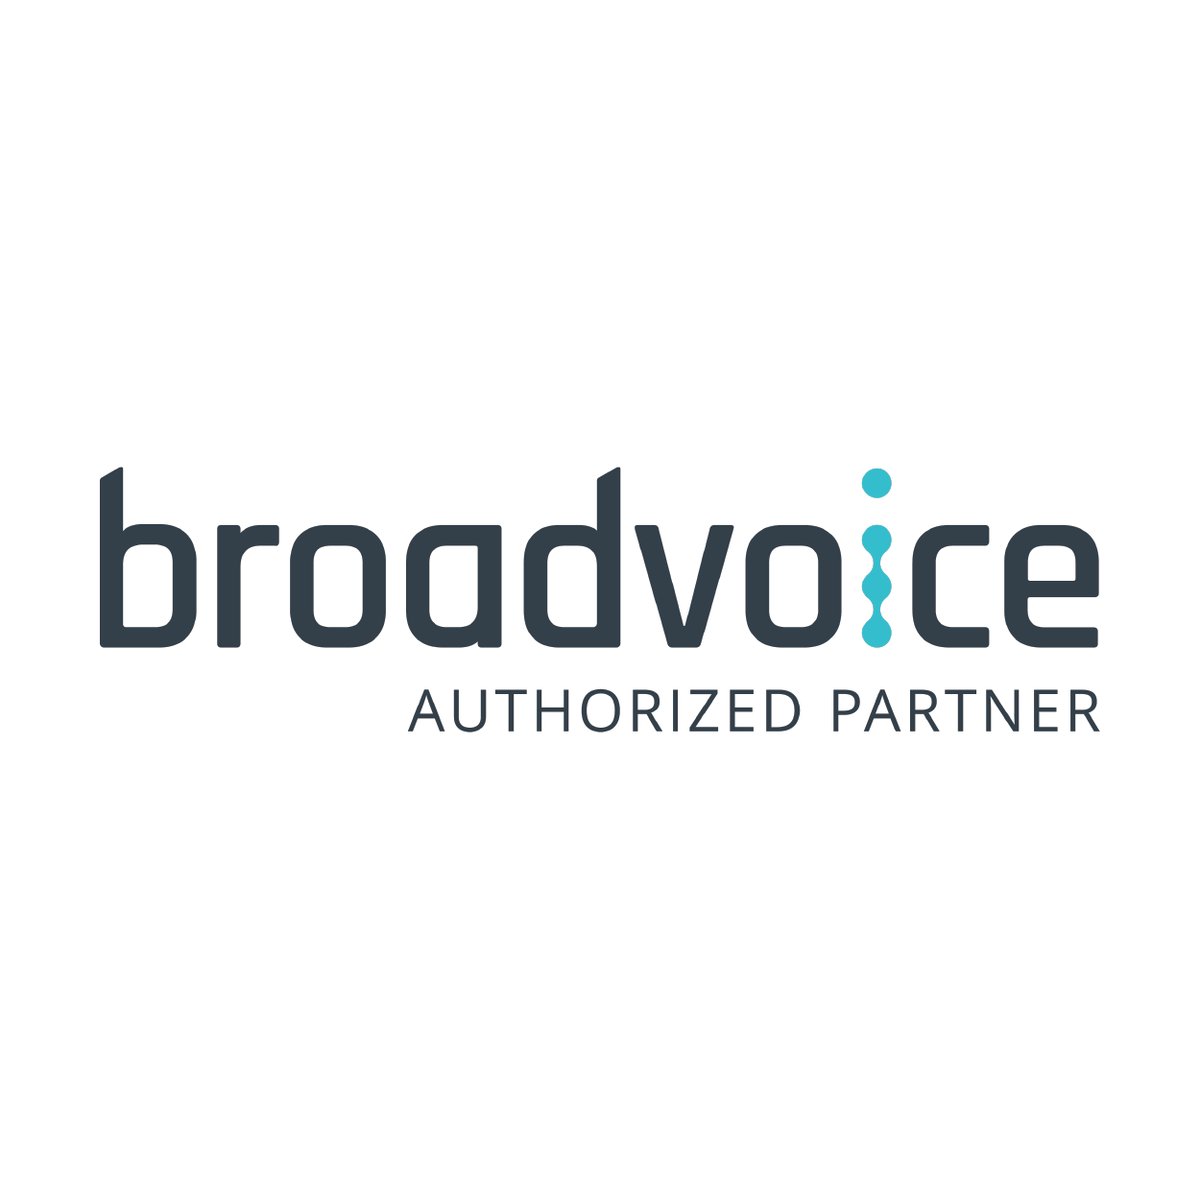 Broadvoice-01